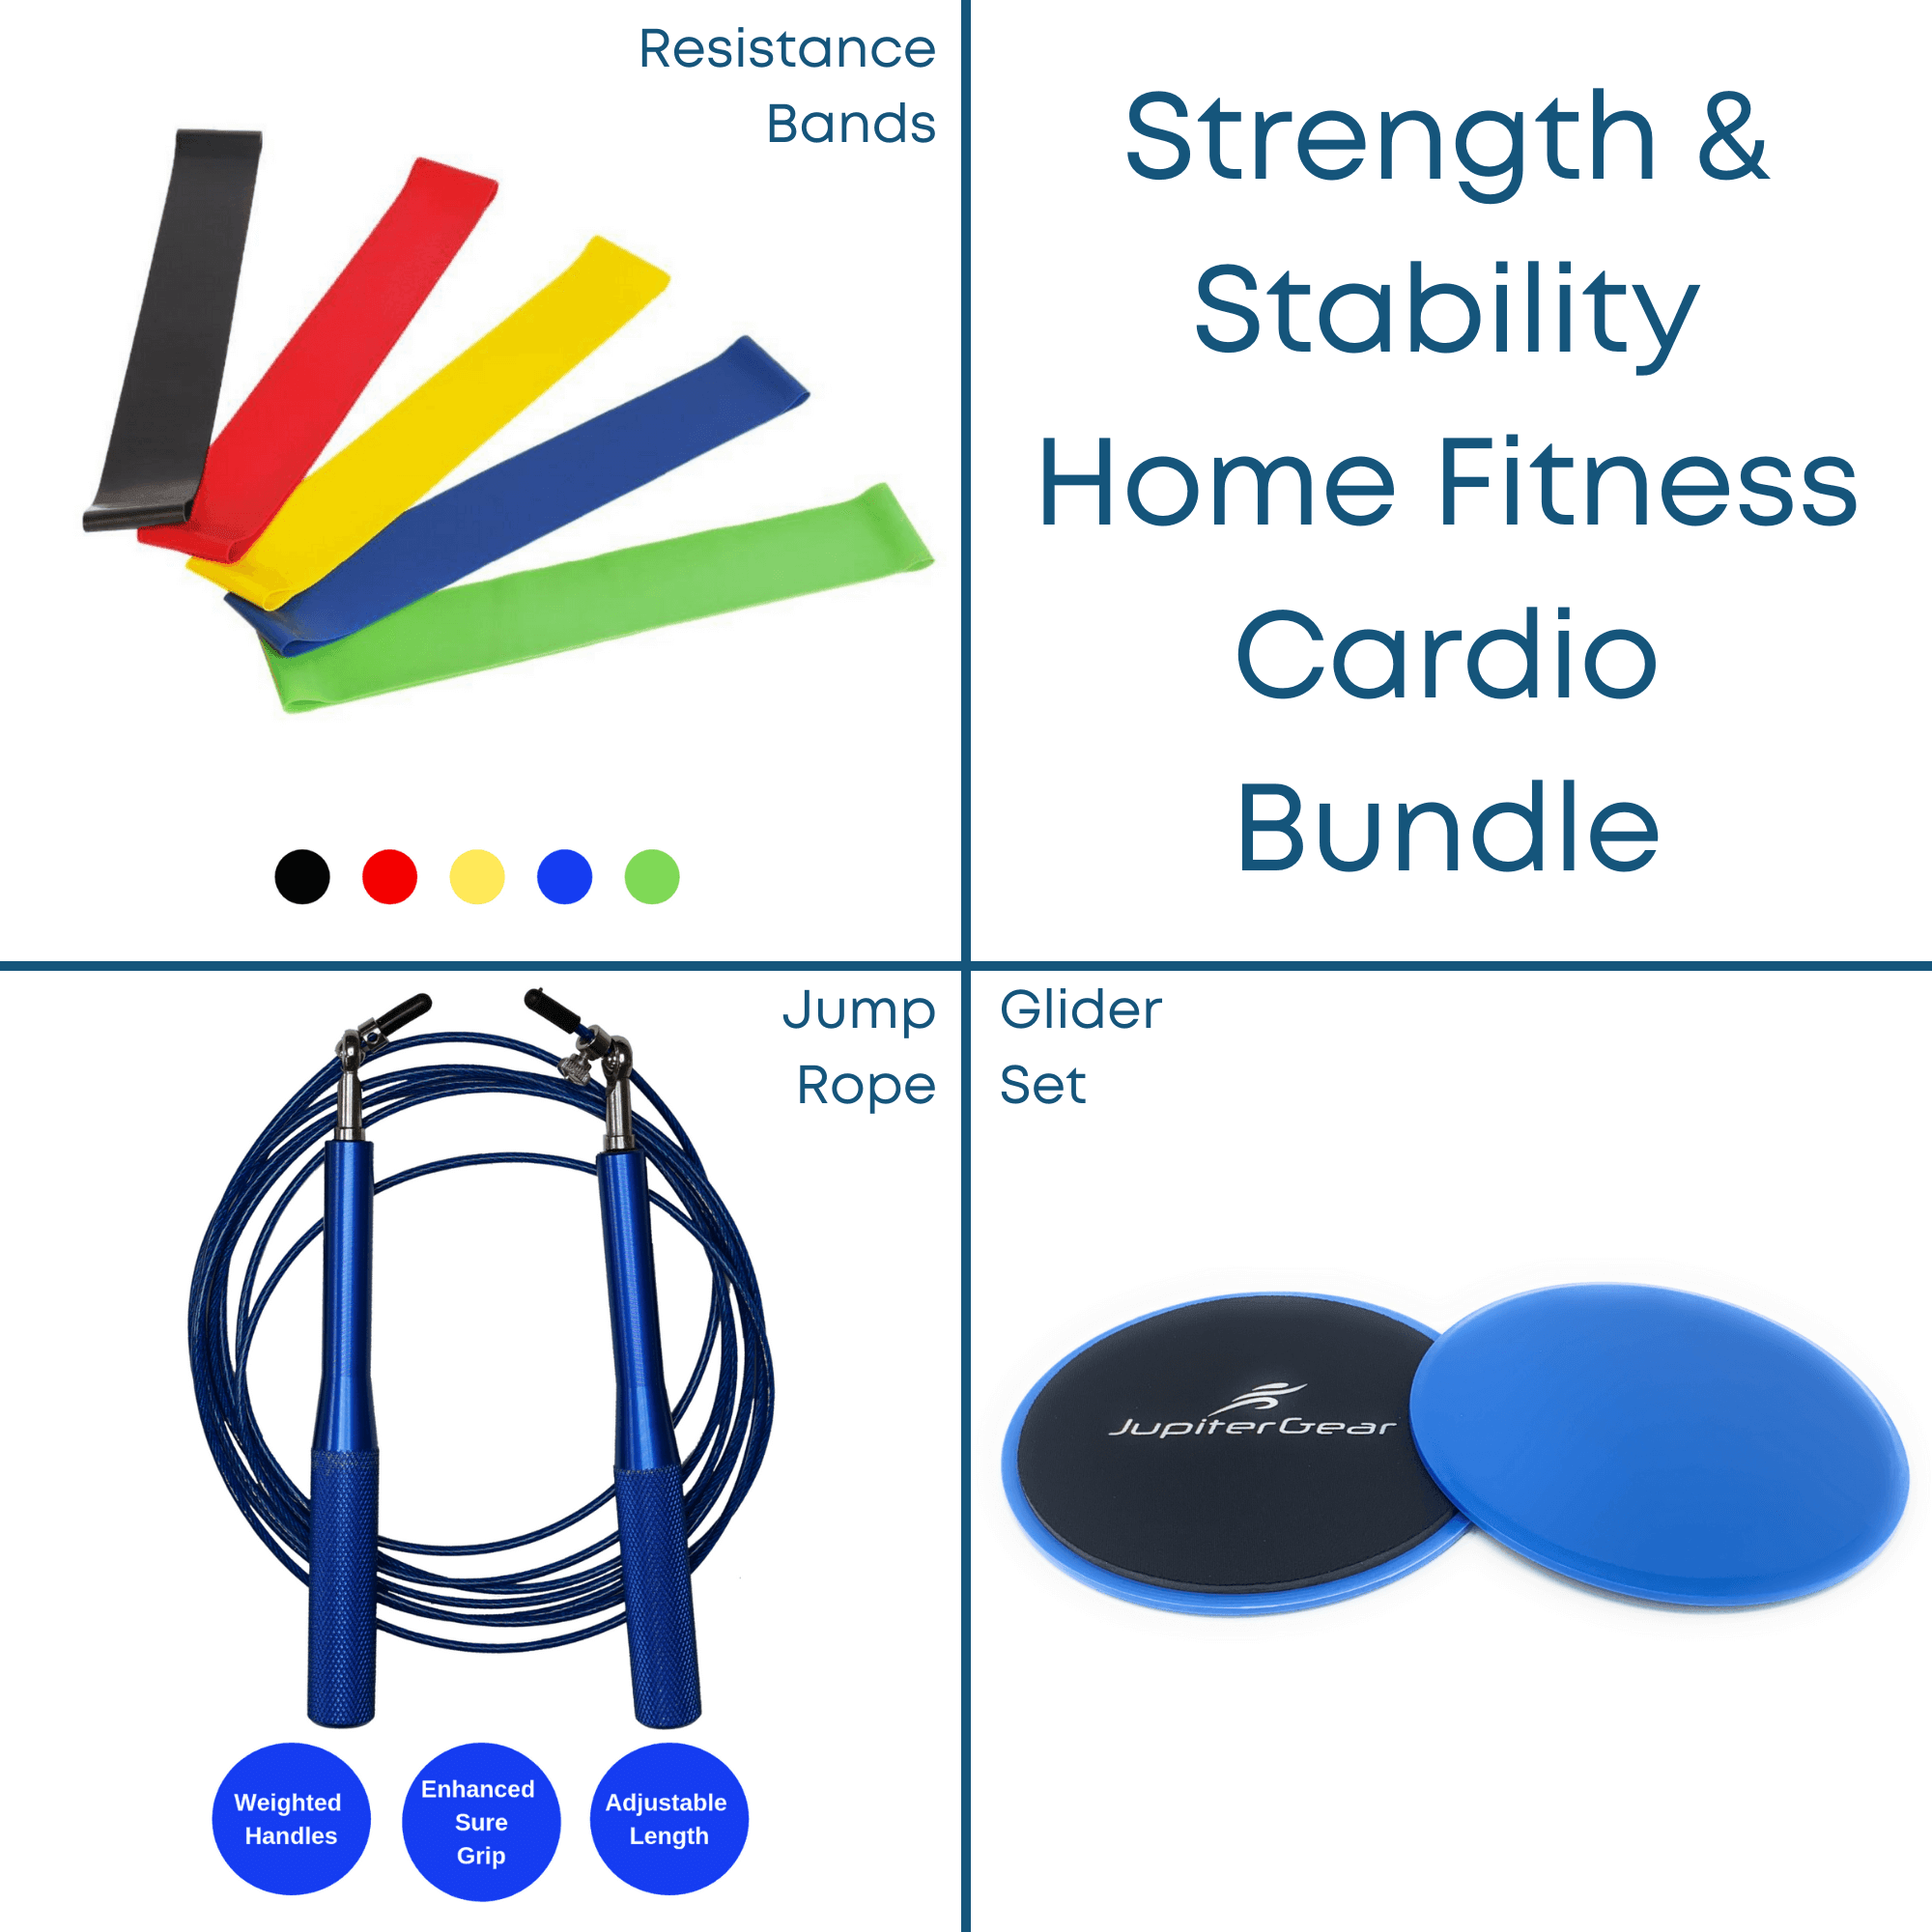 Strength & Stability Home Fitness Cardio Bundle - fashion$ense-6263